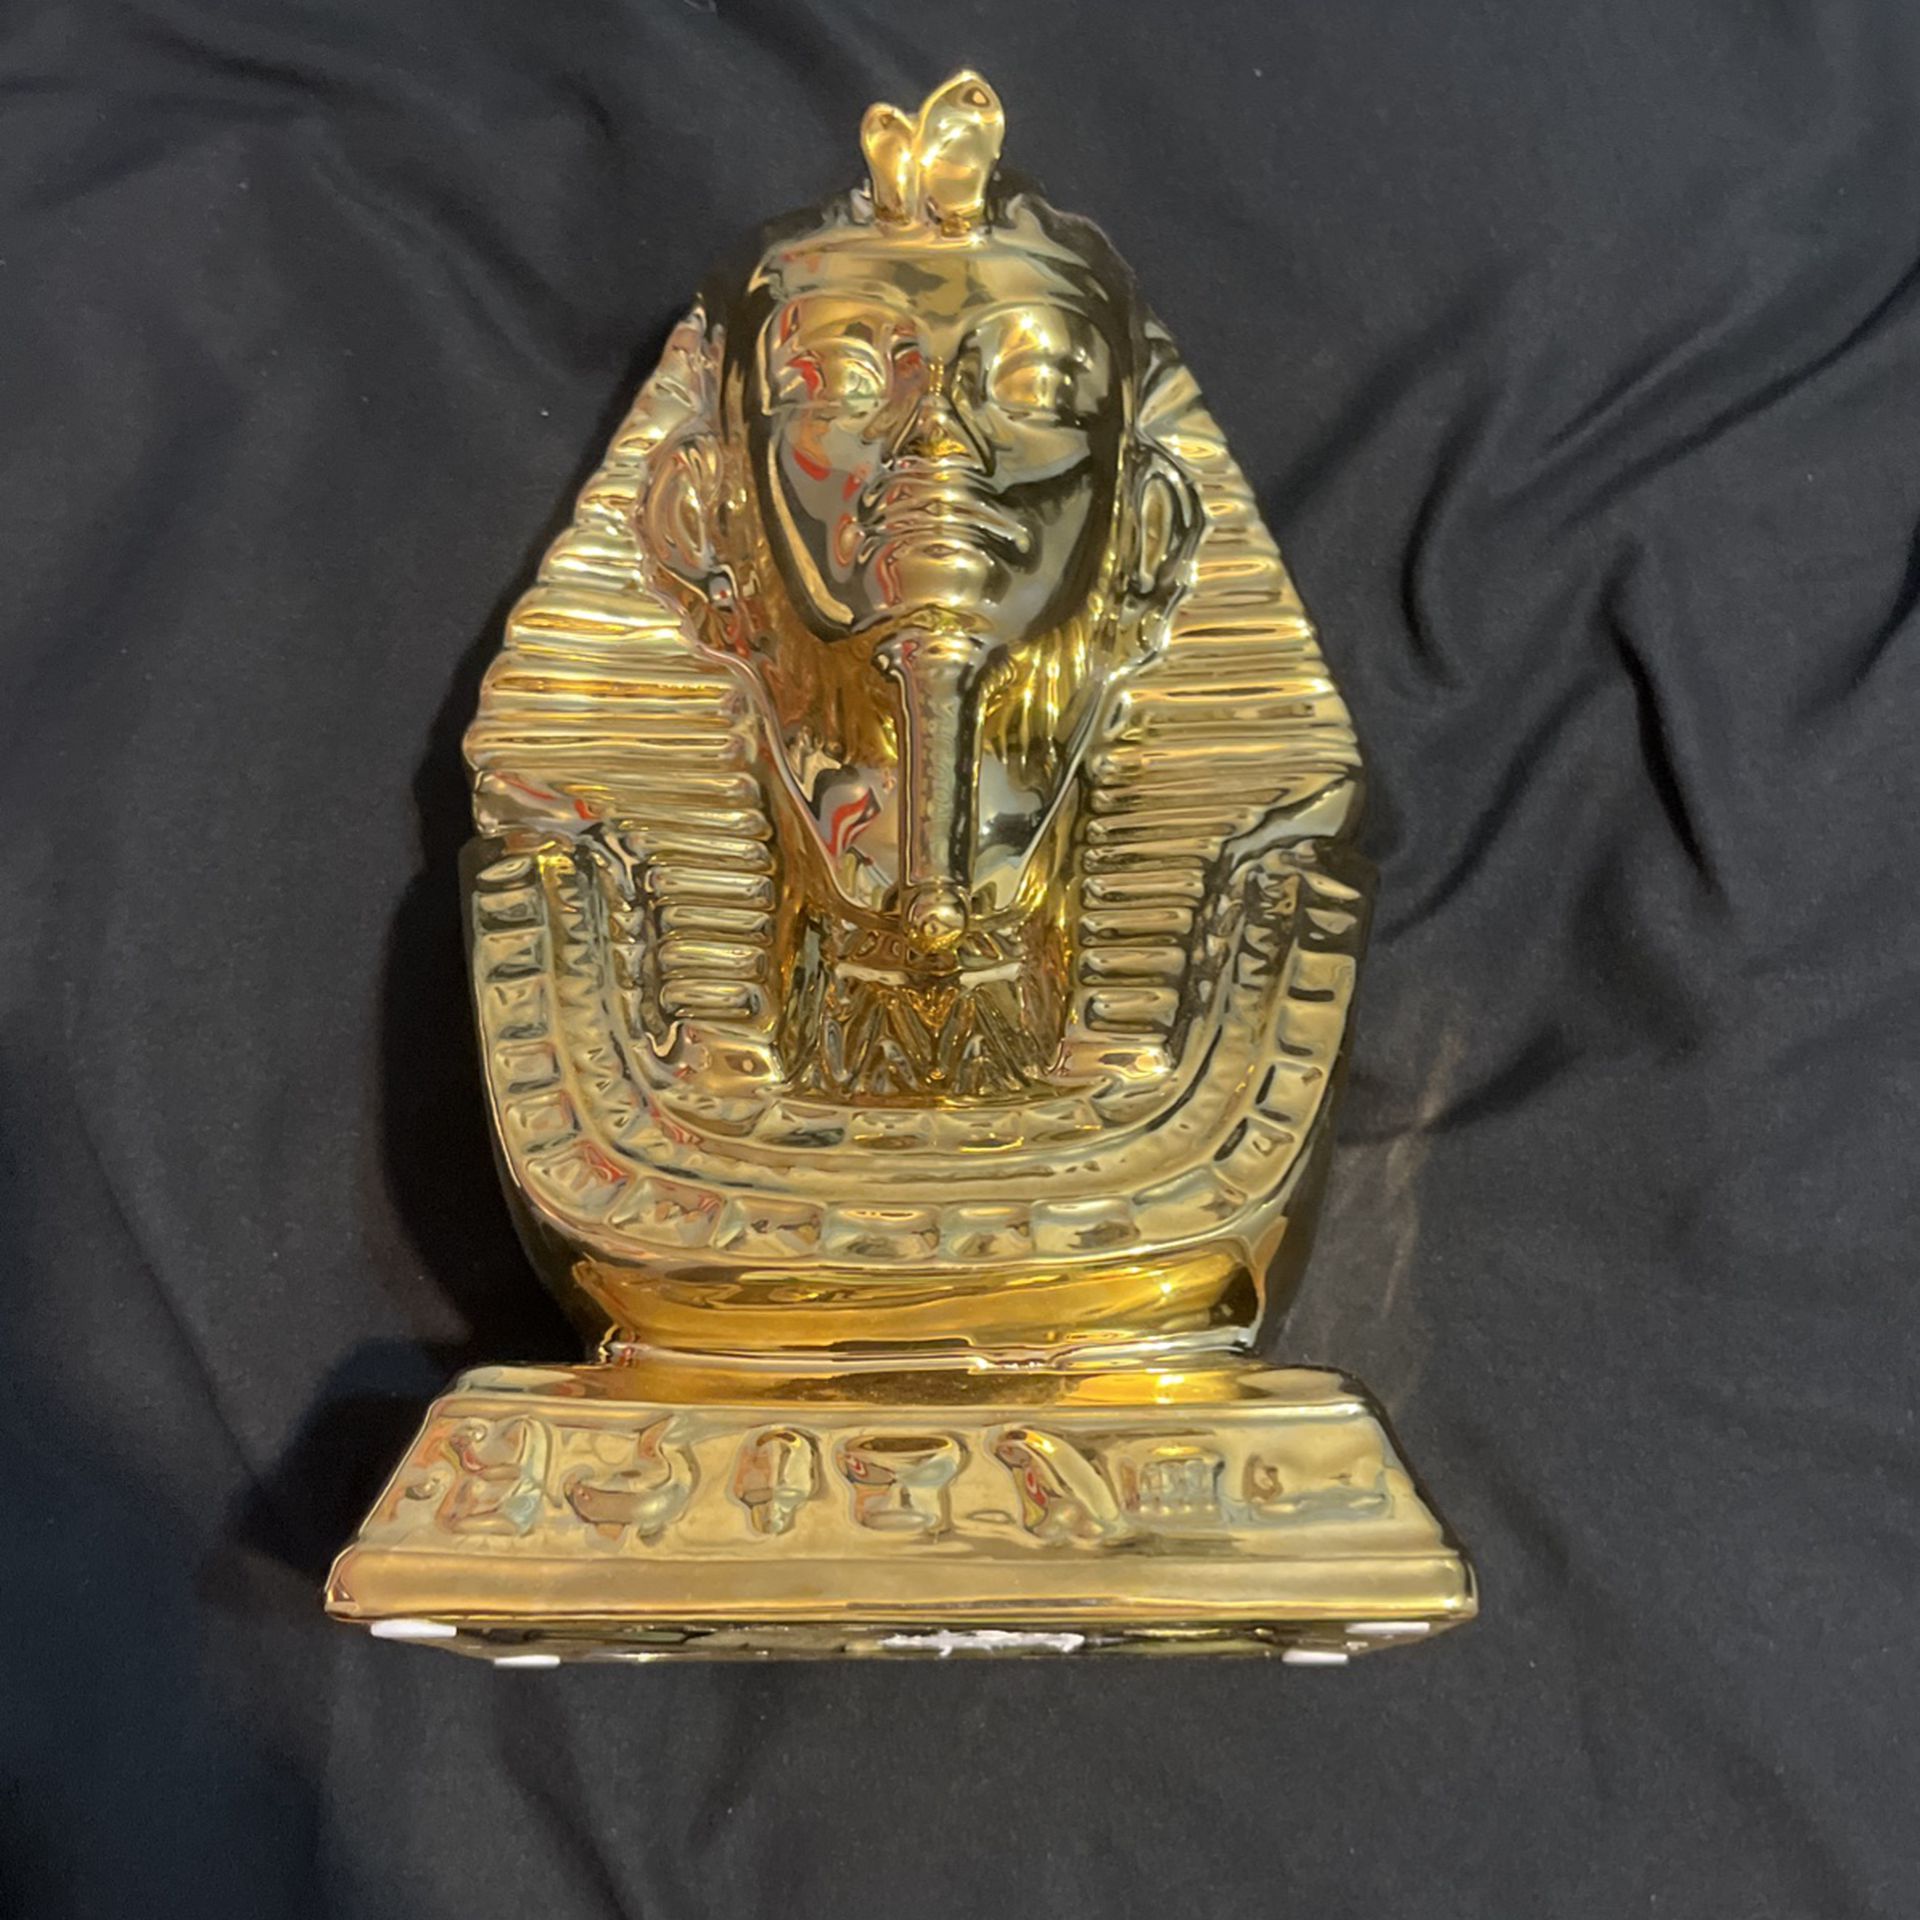 King Tutankhamun statue gold